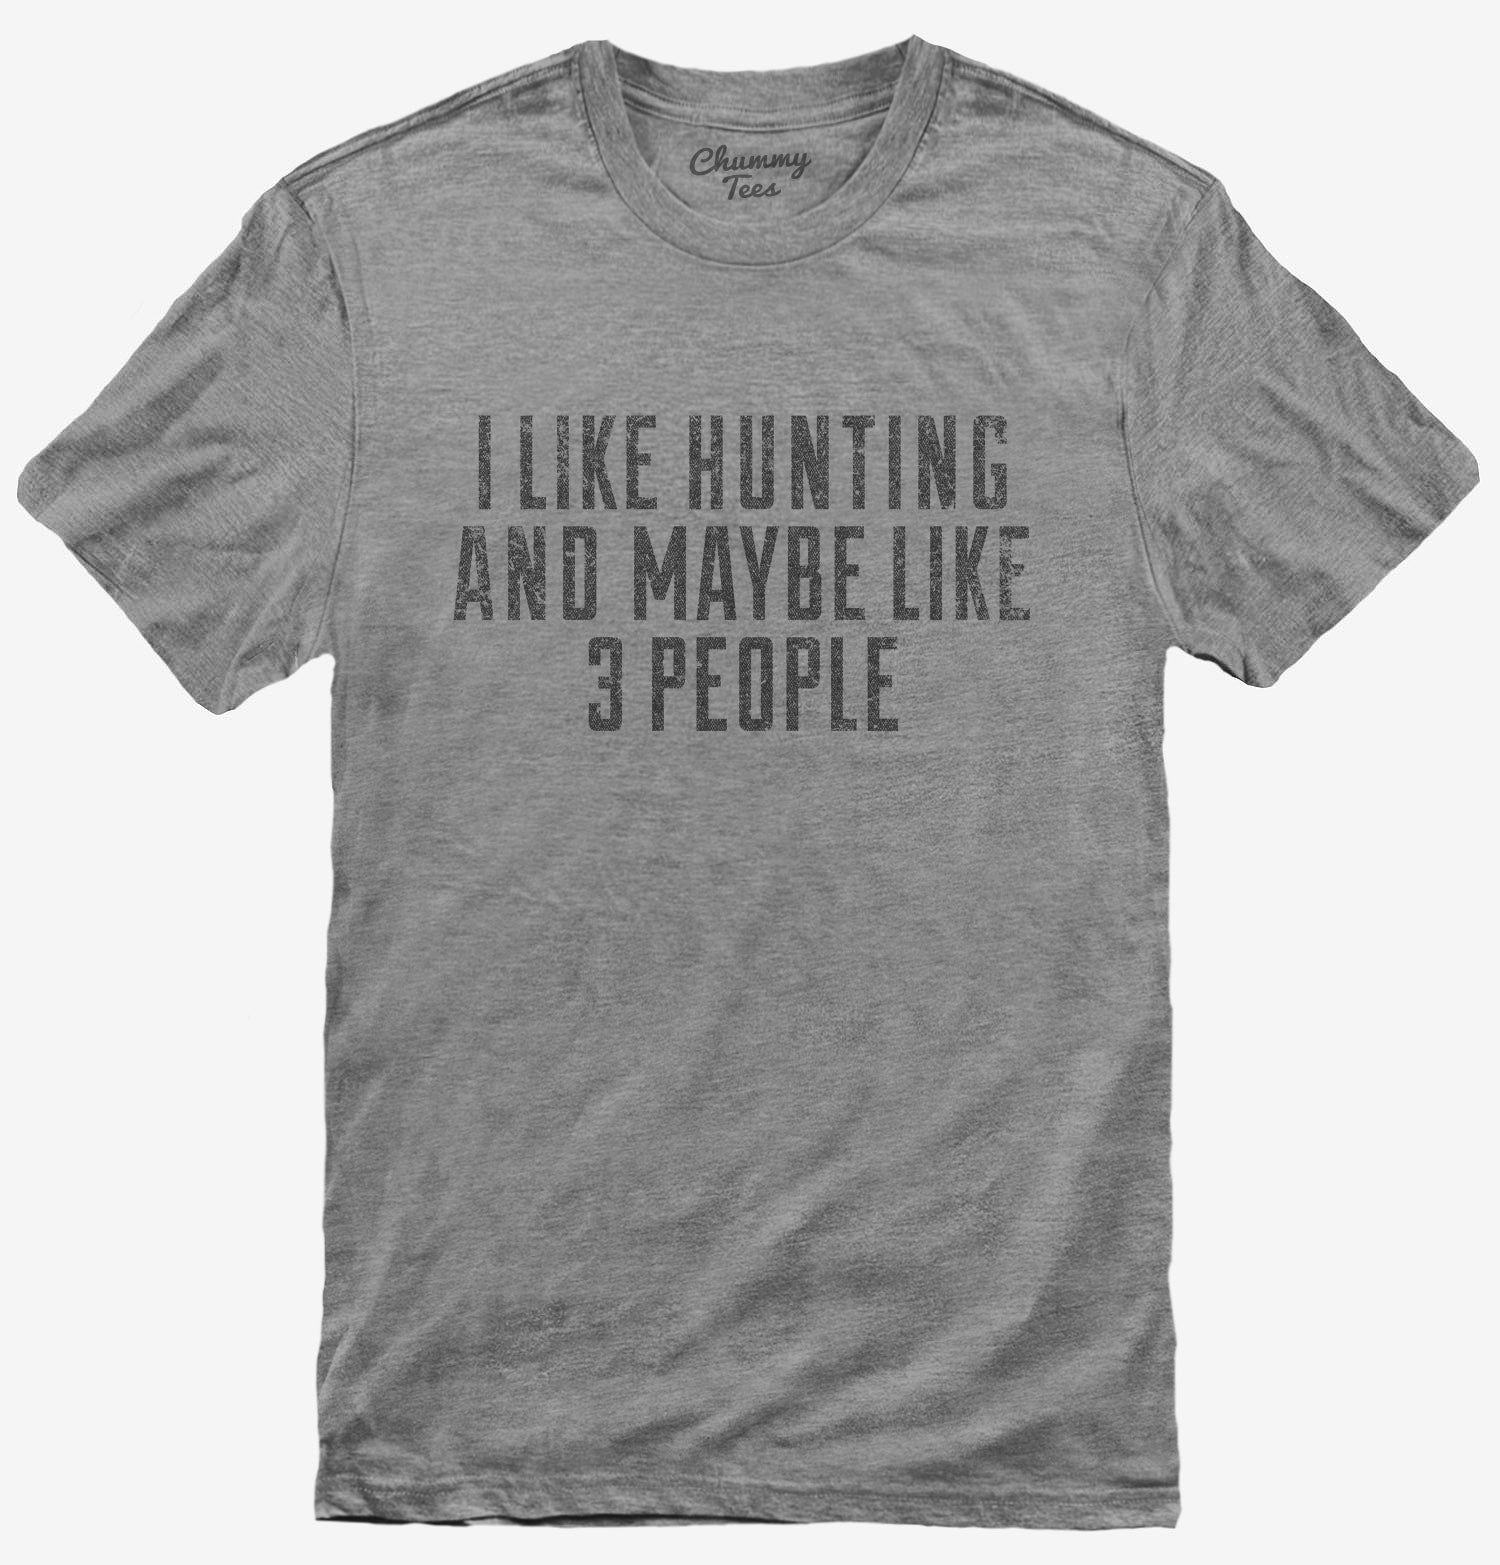 I Like Big Bucks and I Cannot Lie Funny Deer Hunter Hunting T-Shirt